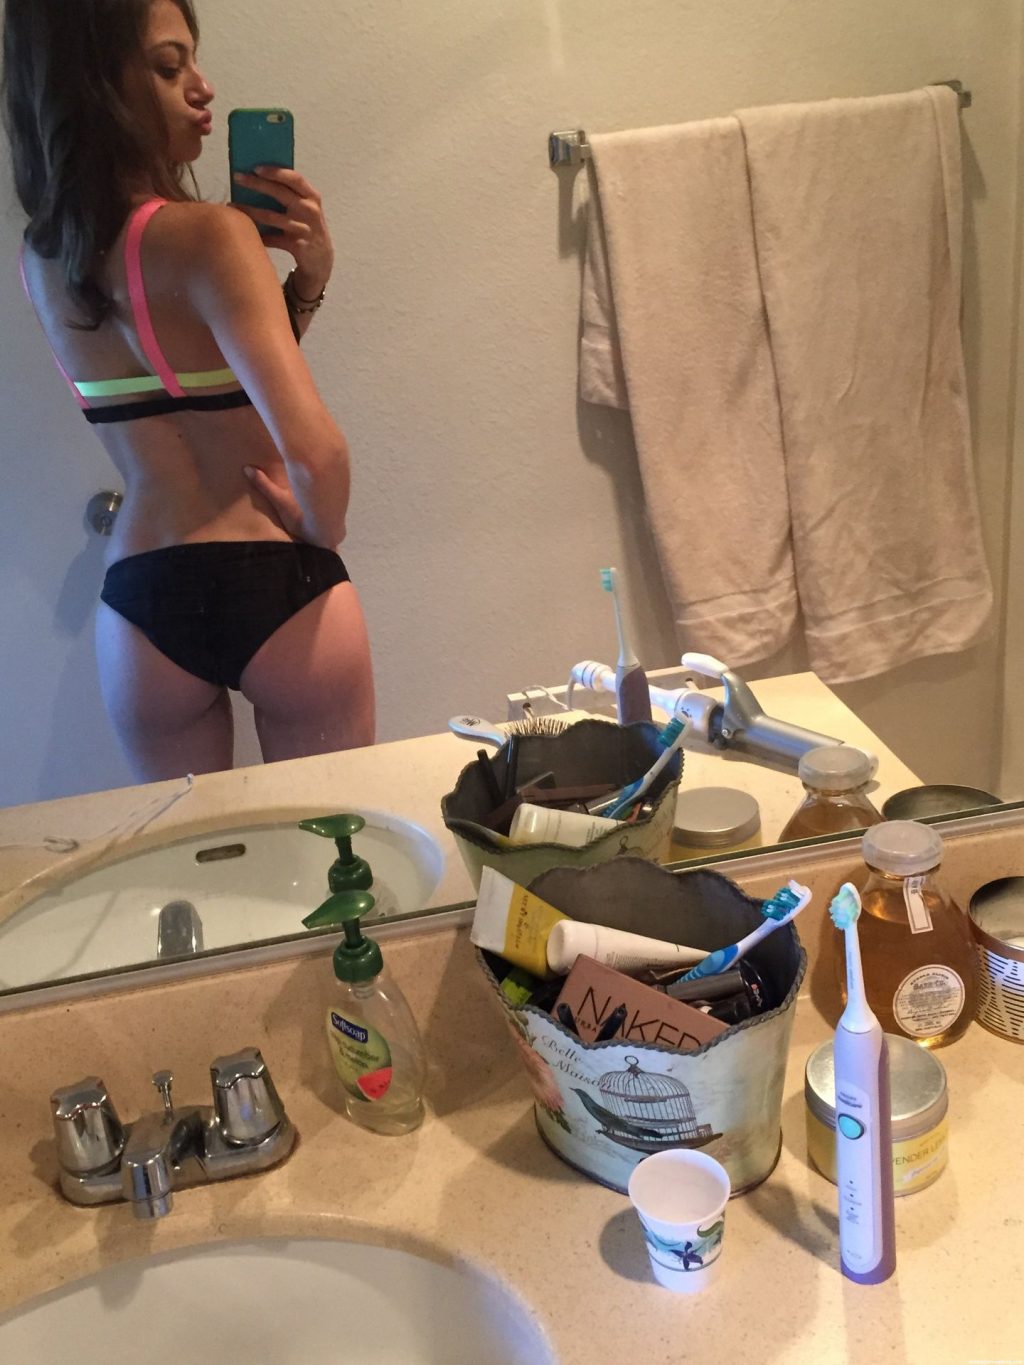 Mia Serafino Nude Leaked The Fappening &amp; Sexy (59 Photos)